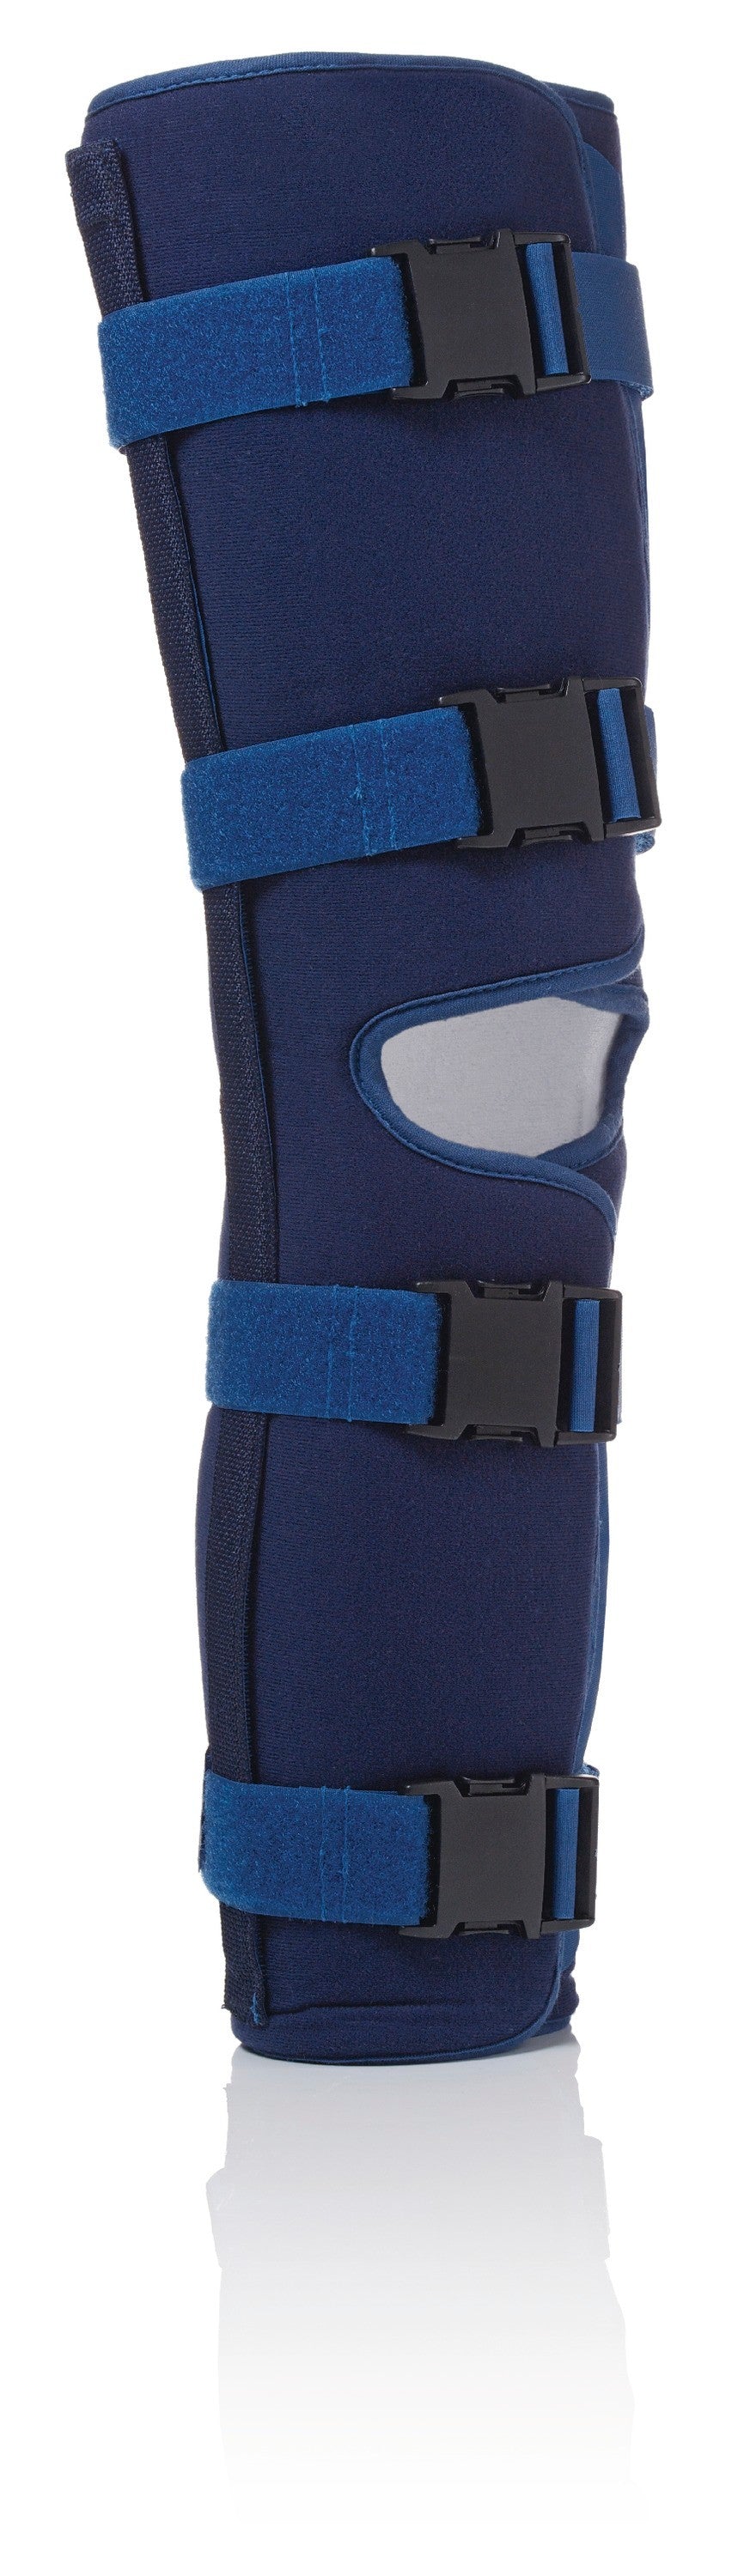 Actimove® Genu Clips Knee Immobilizer